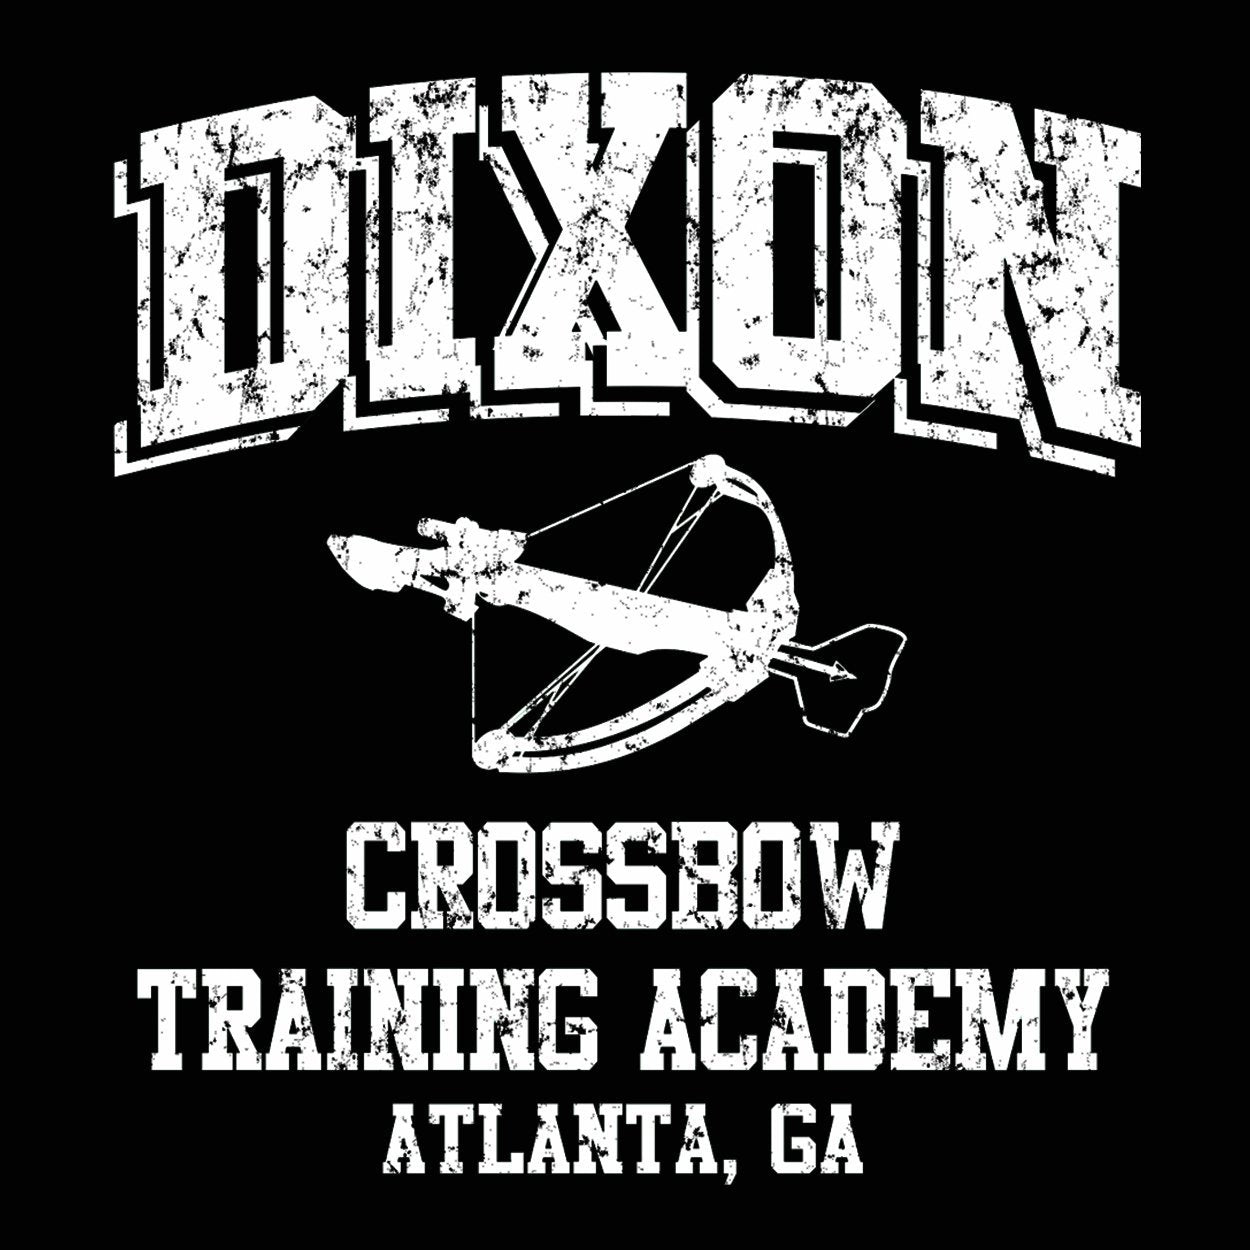 Daryl Dixon Crossbow - DonkeyTees